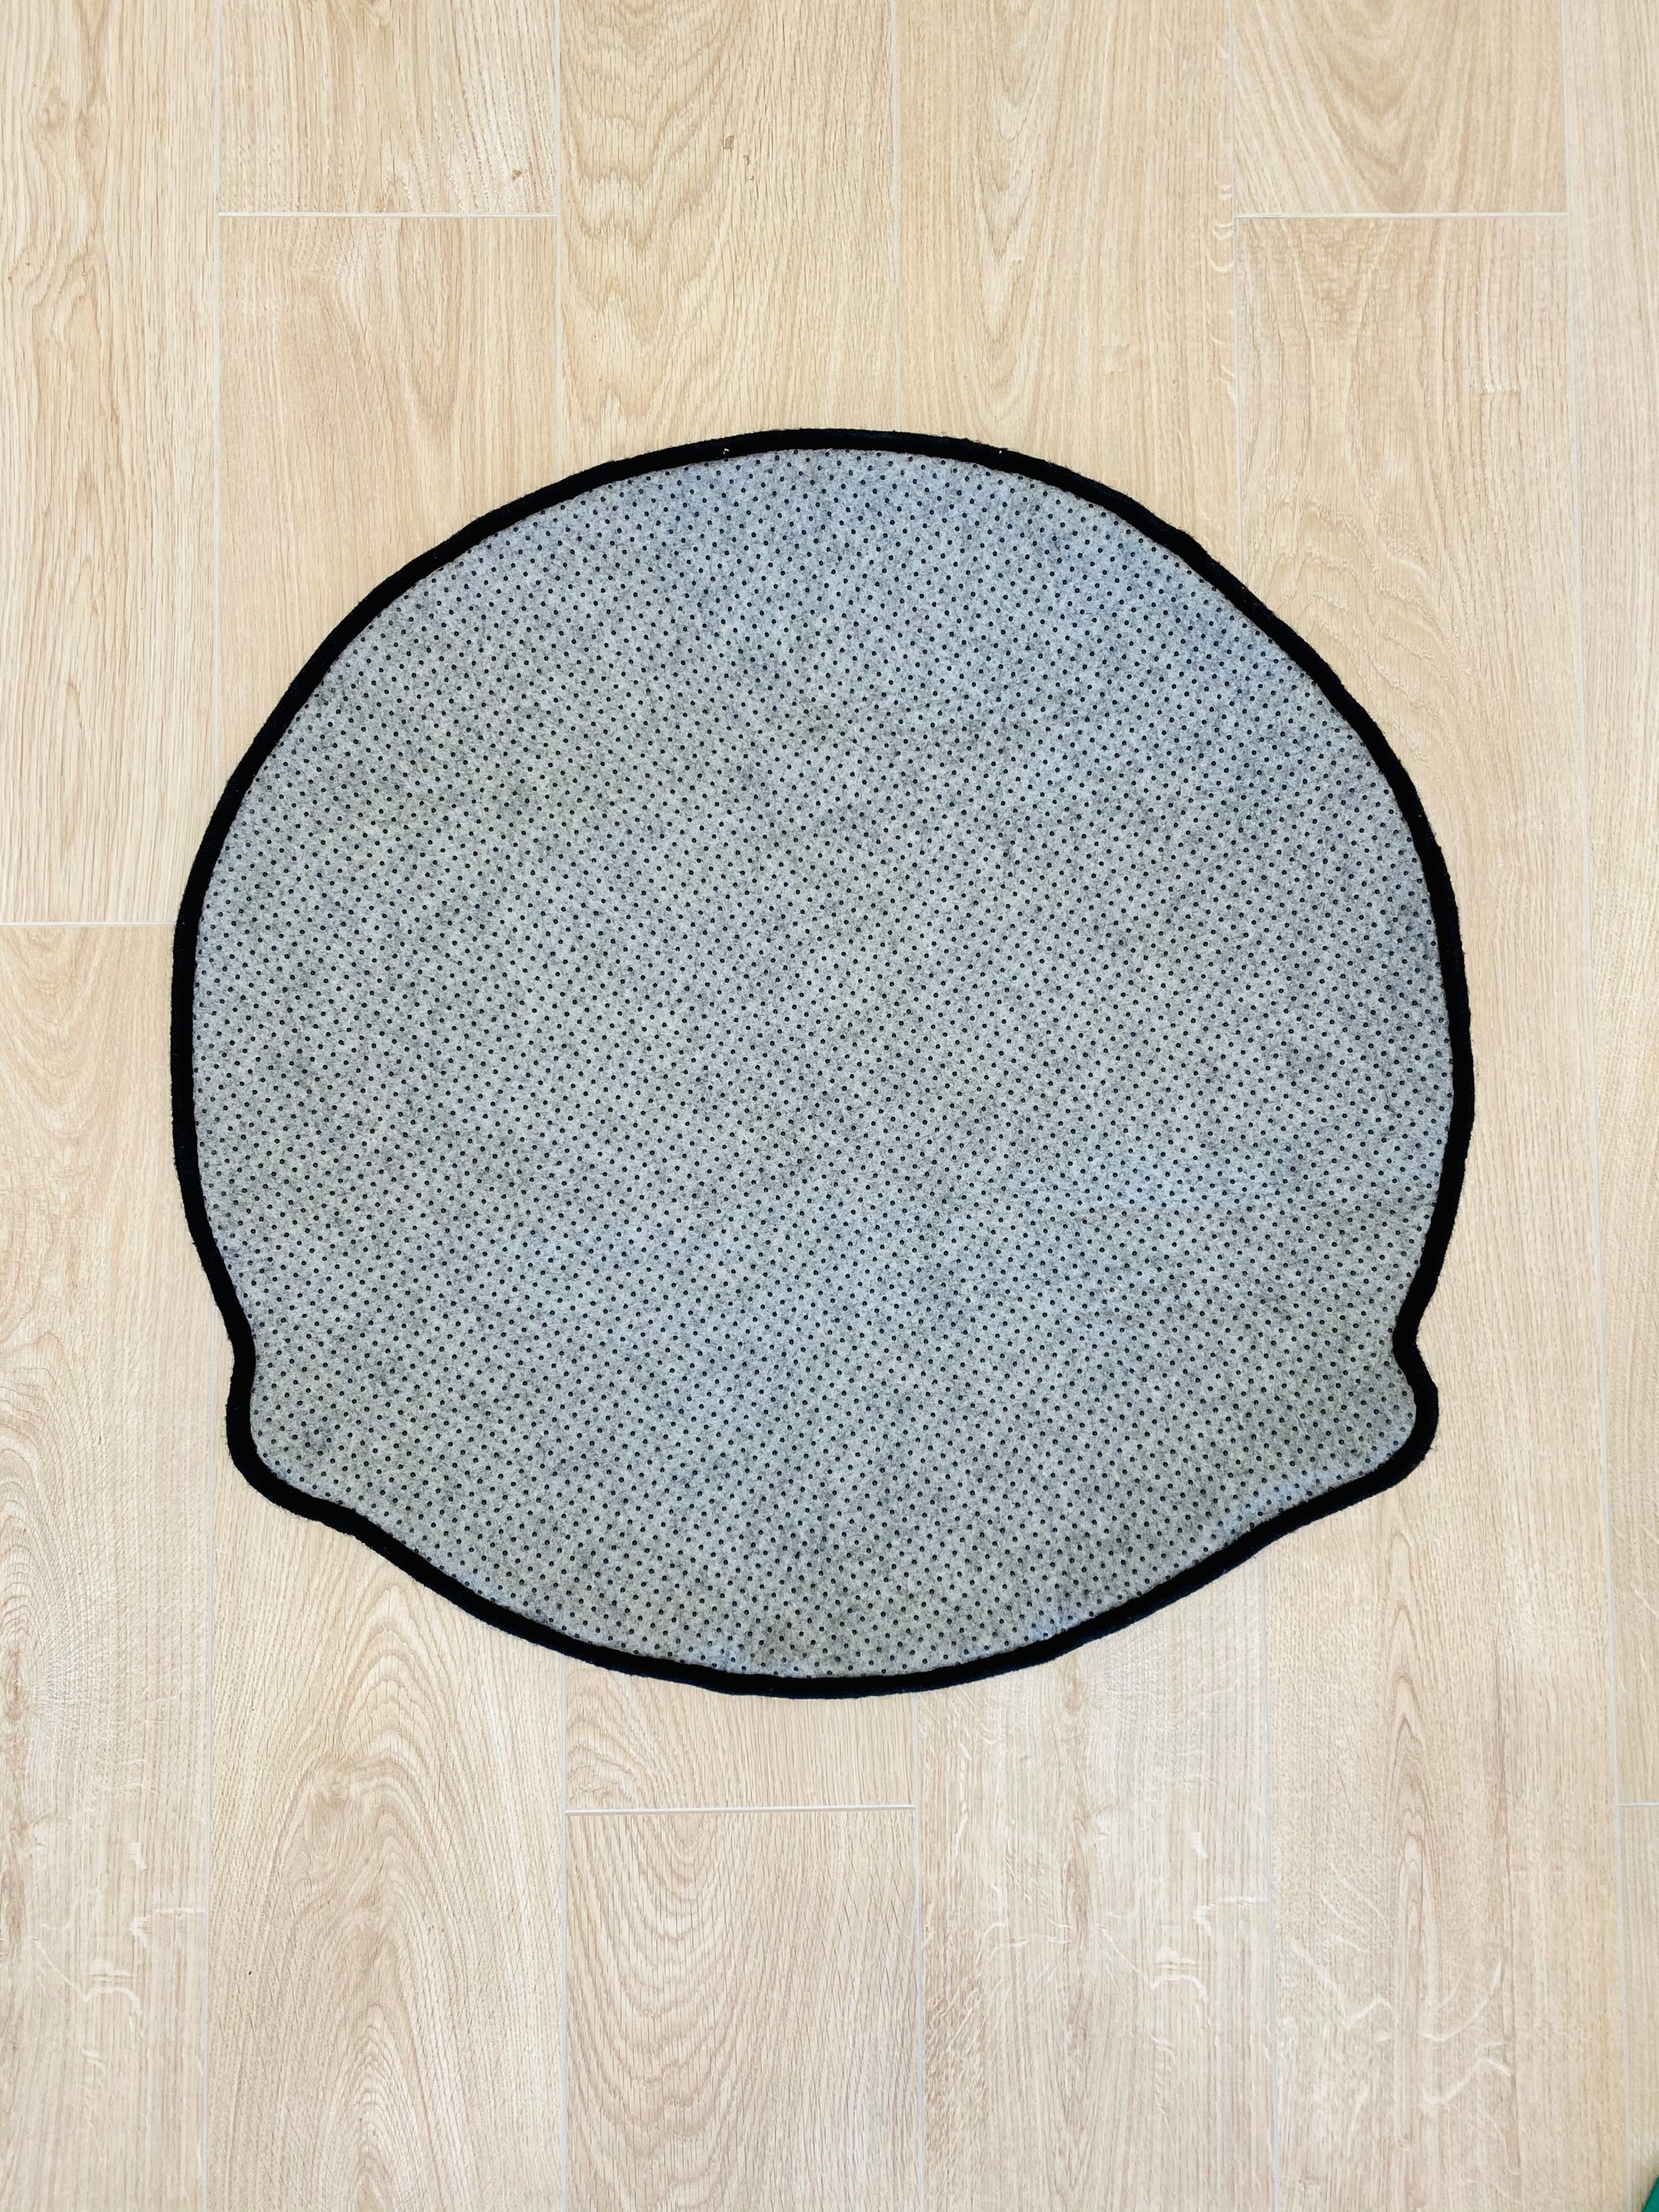 Hebru Brantley Wool Thread Modern Accent Premium Area Living Room Carpet